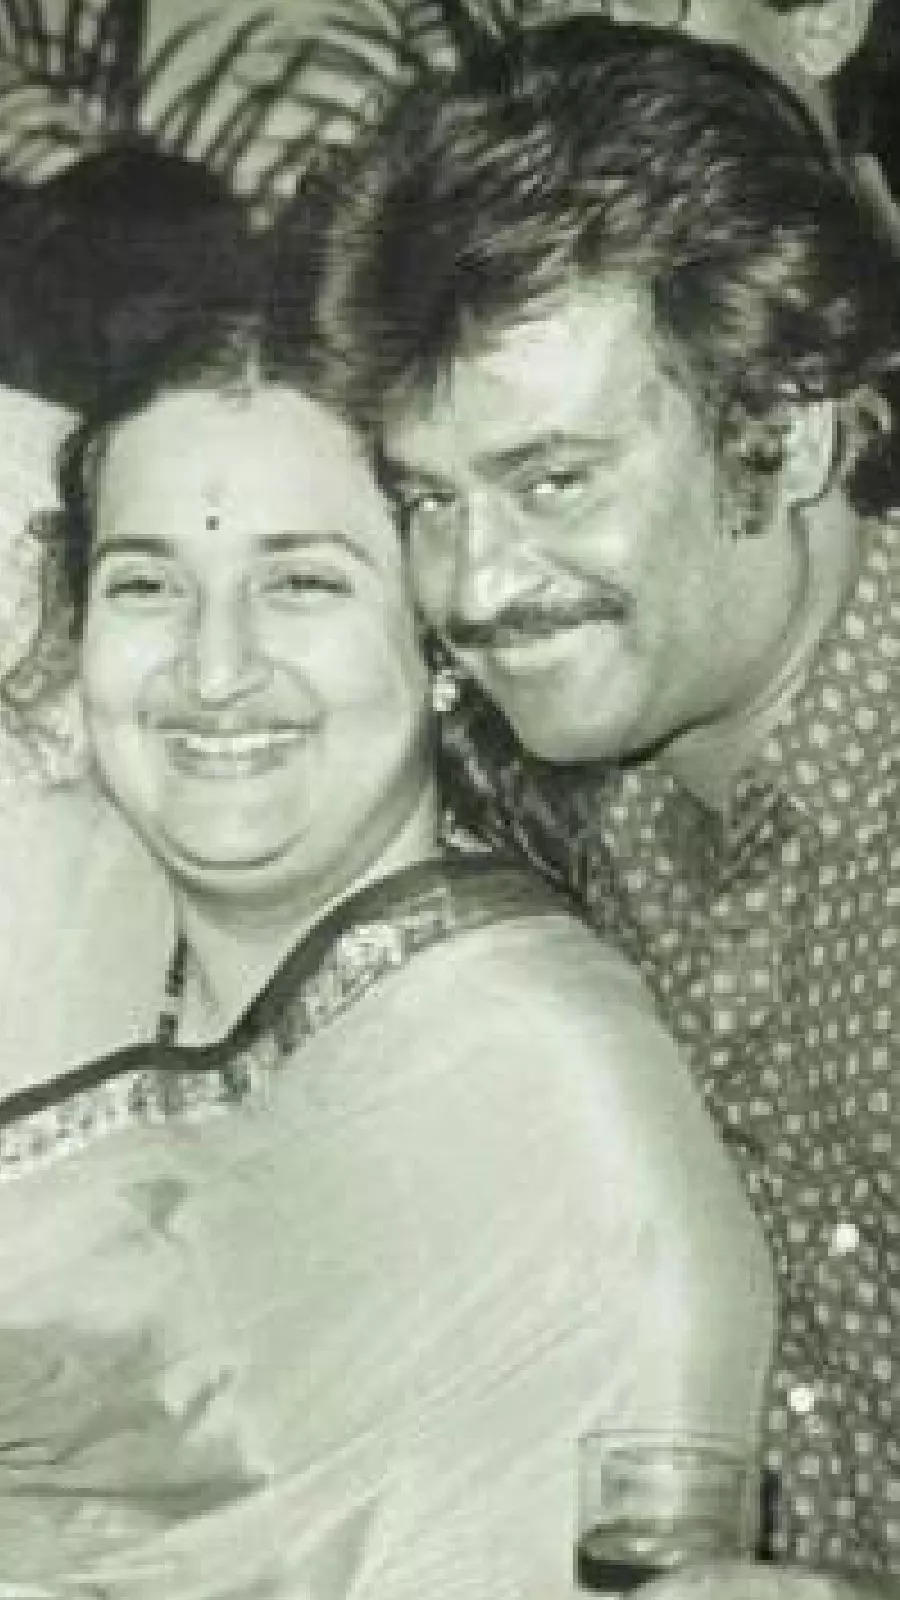 Rajinikanth and wife Latha's love story | Times of India